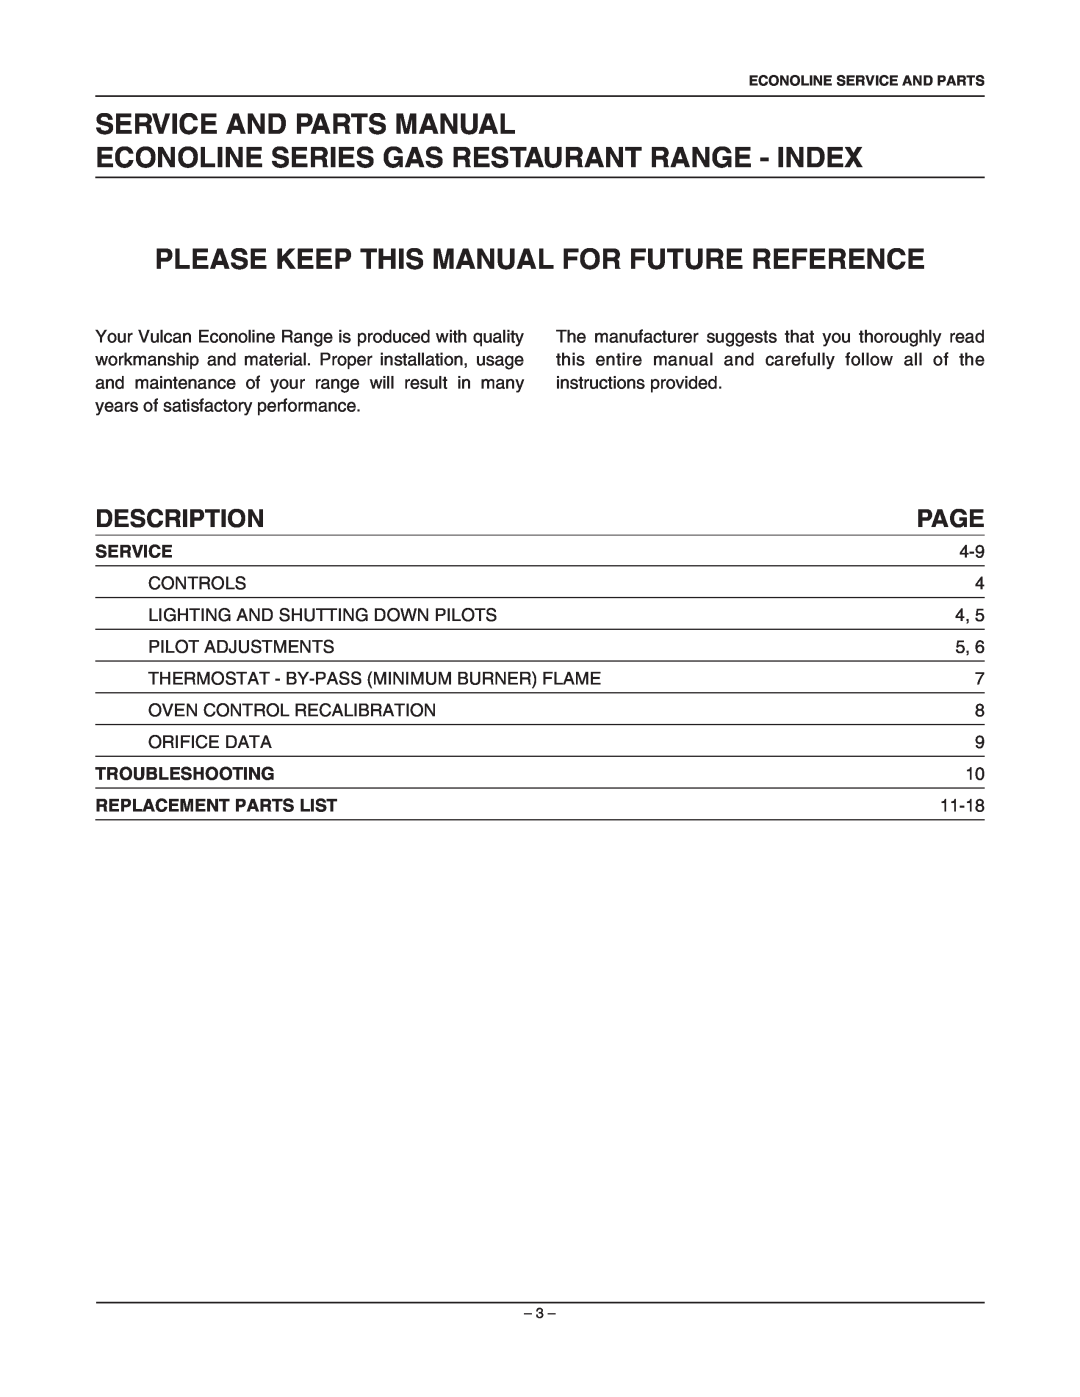 Vulcan-Hart 260L77R, 36L77R Service And Parts Manual, Econoline Series Gas Restaurant Range - Index, Description, Page 